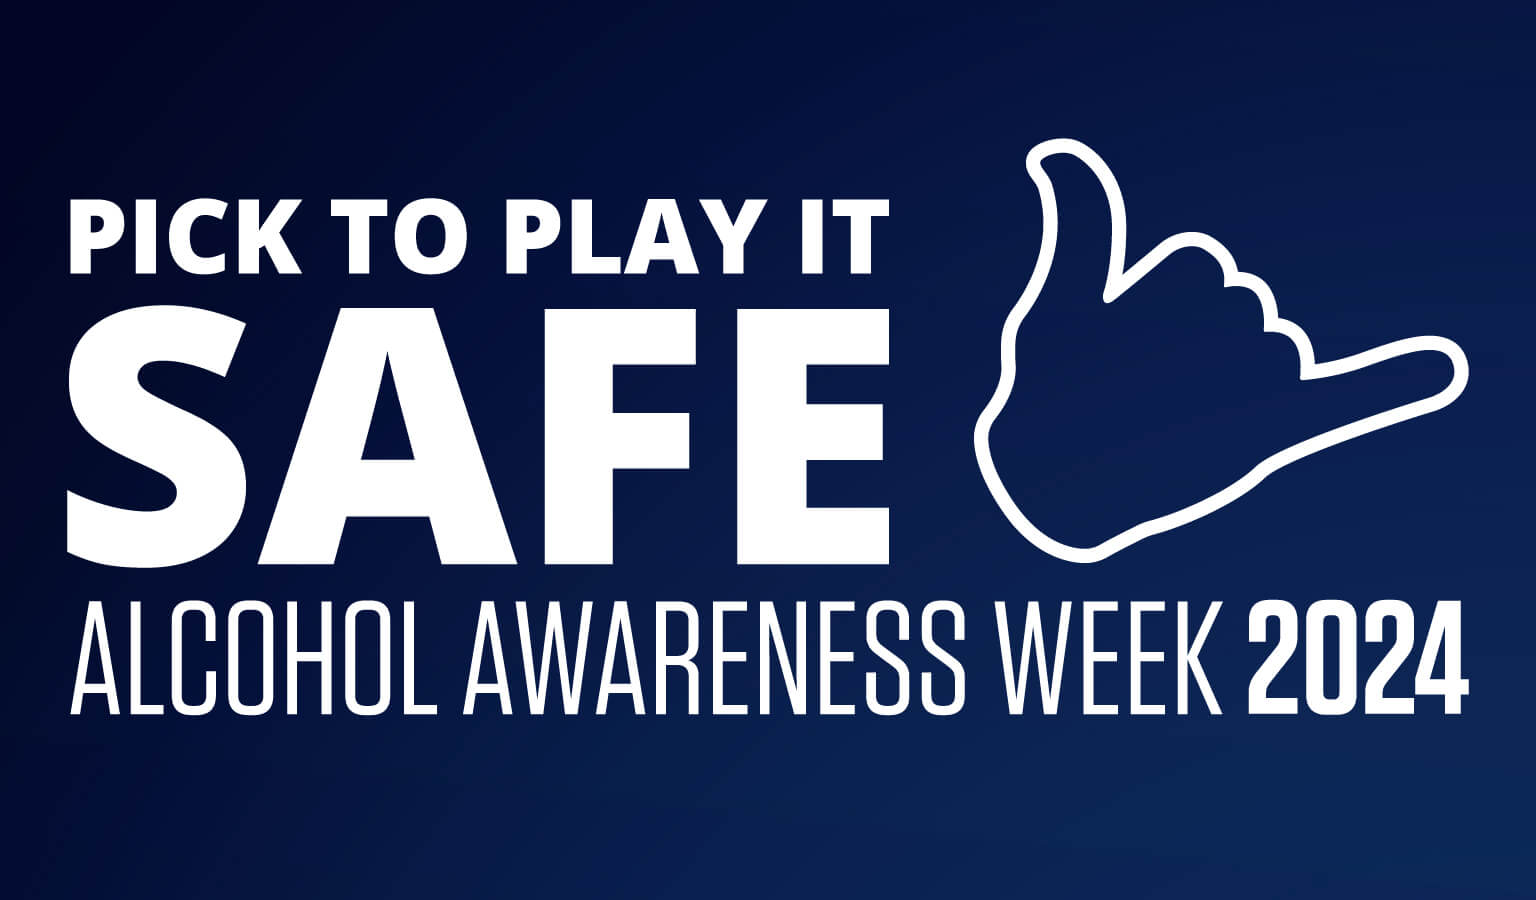 Pick to Play it Safe Alchohol Awareness Week 2024